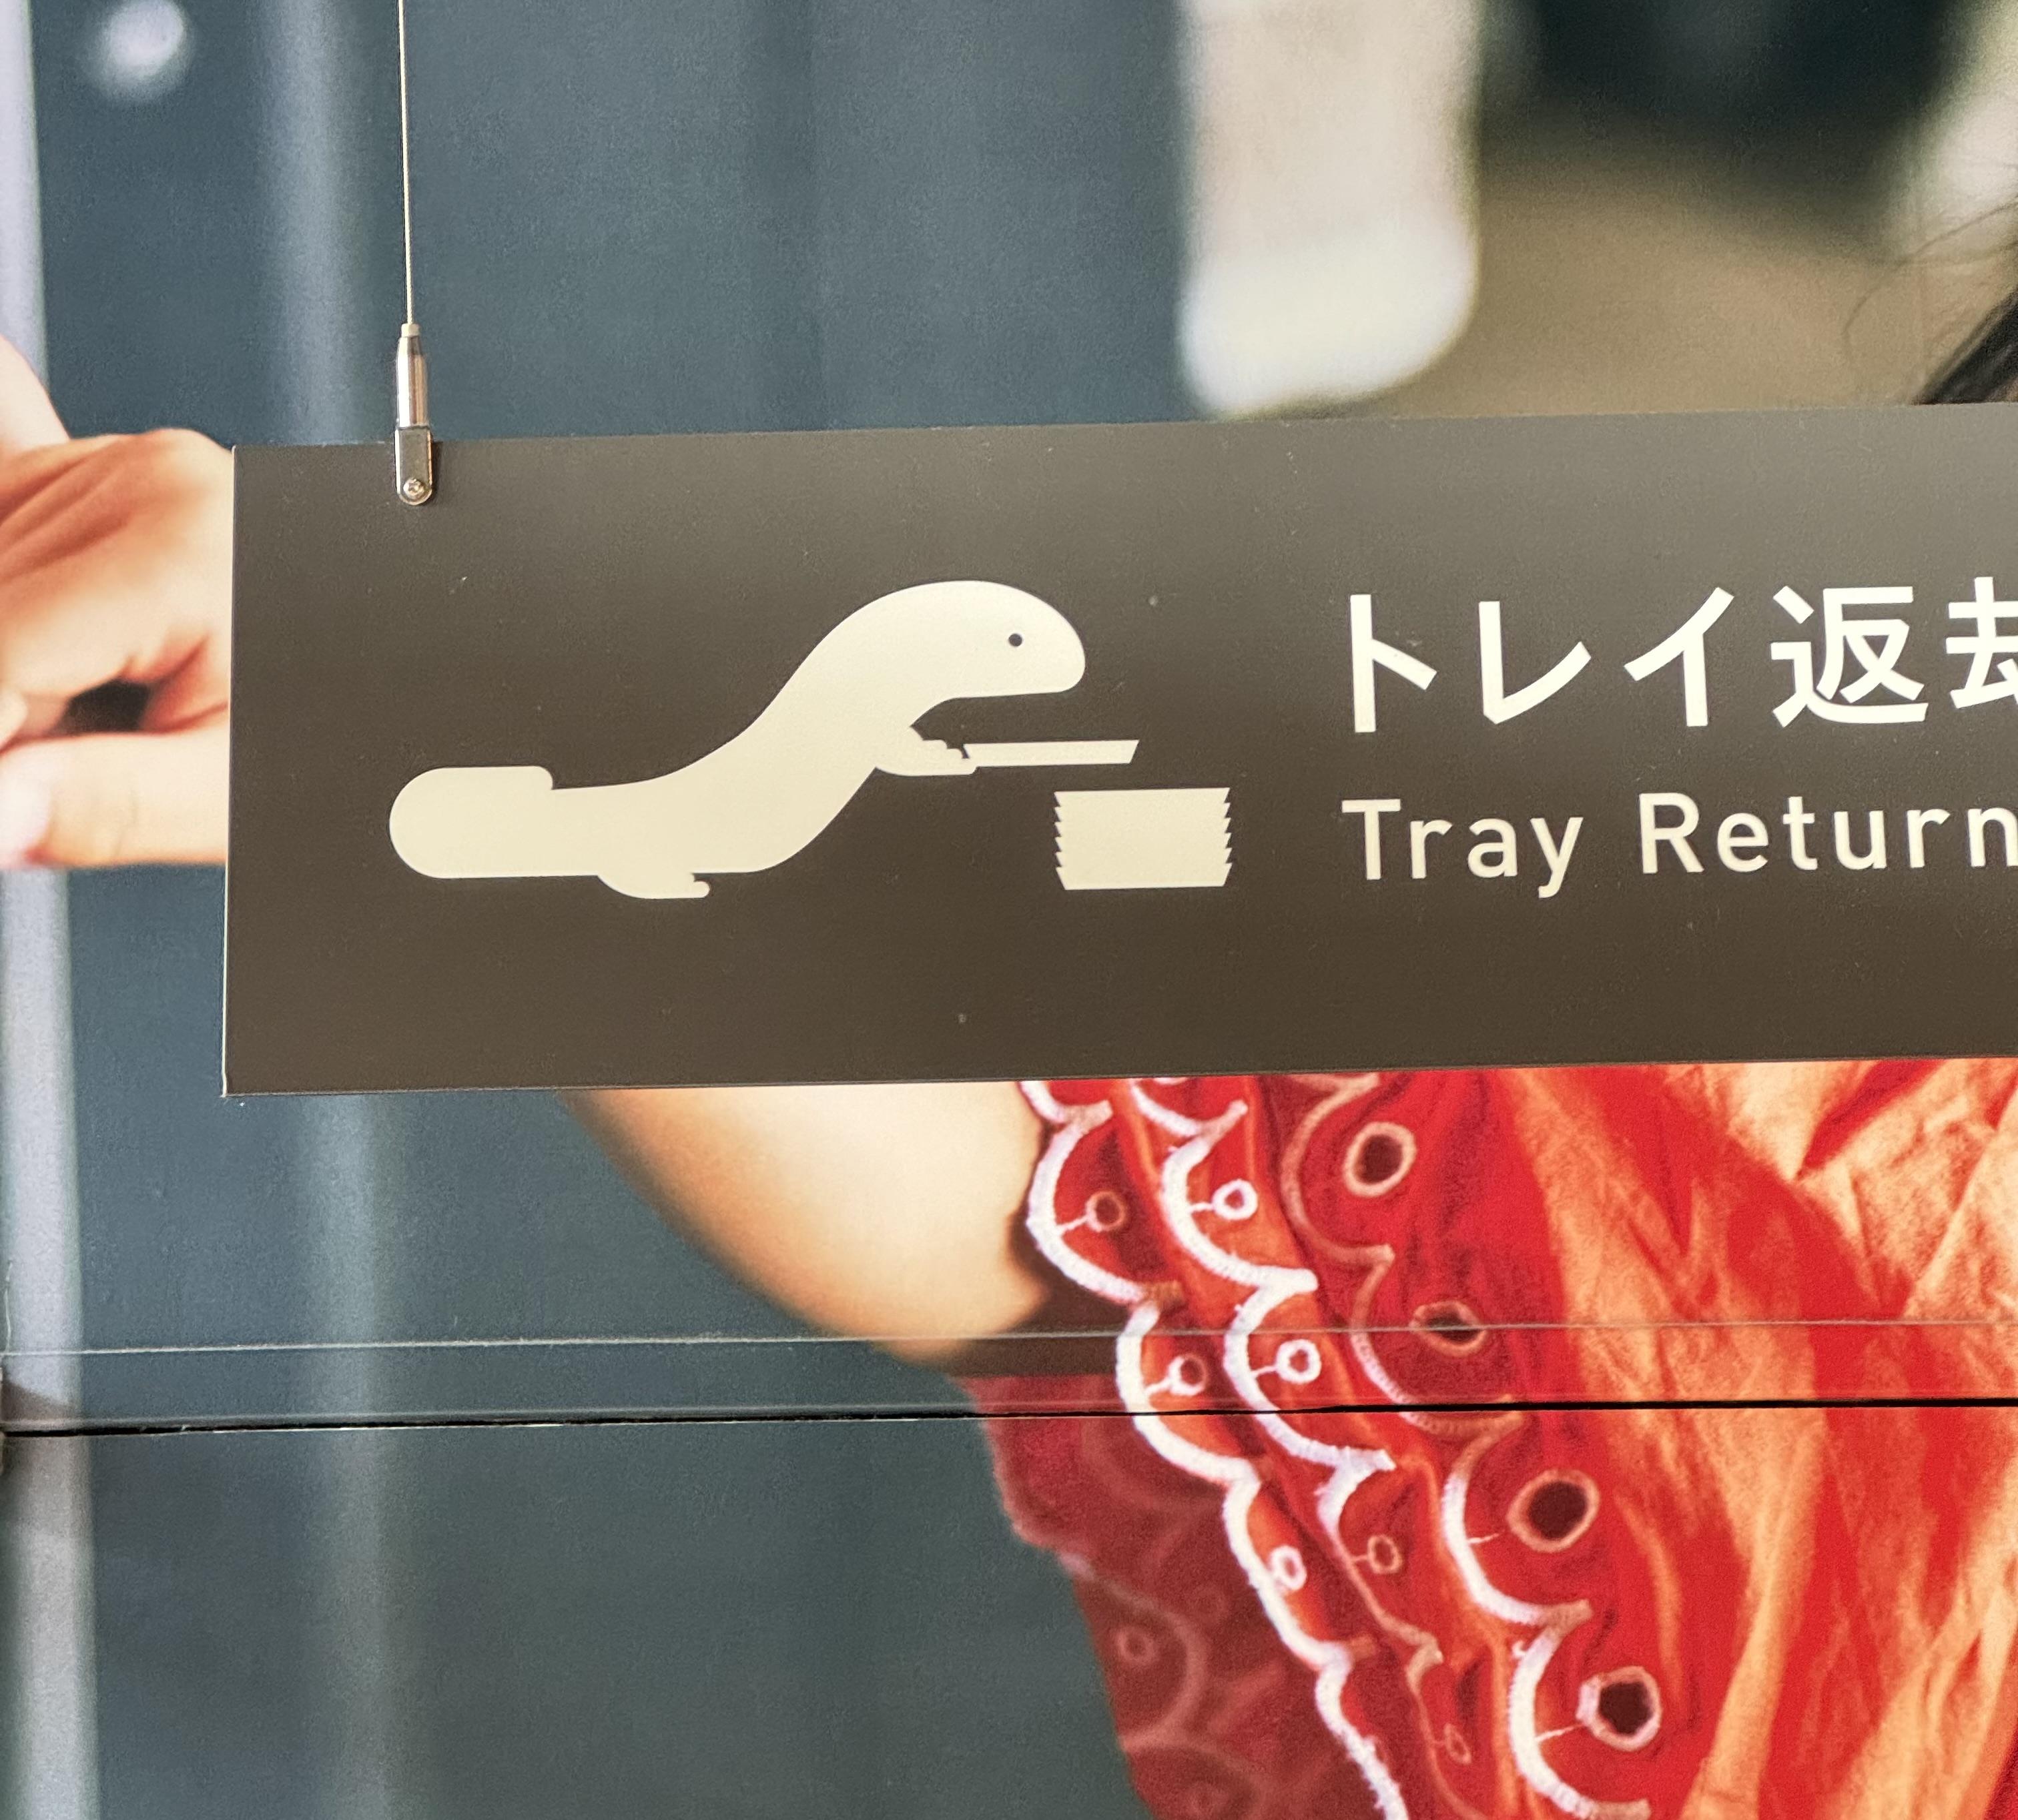 A sign depicting a giant salamander returning a tray at Kyoto Aquarium